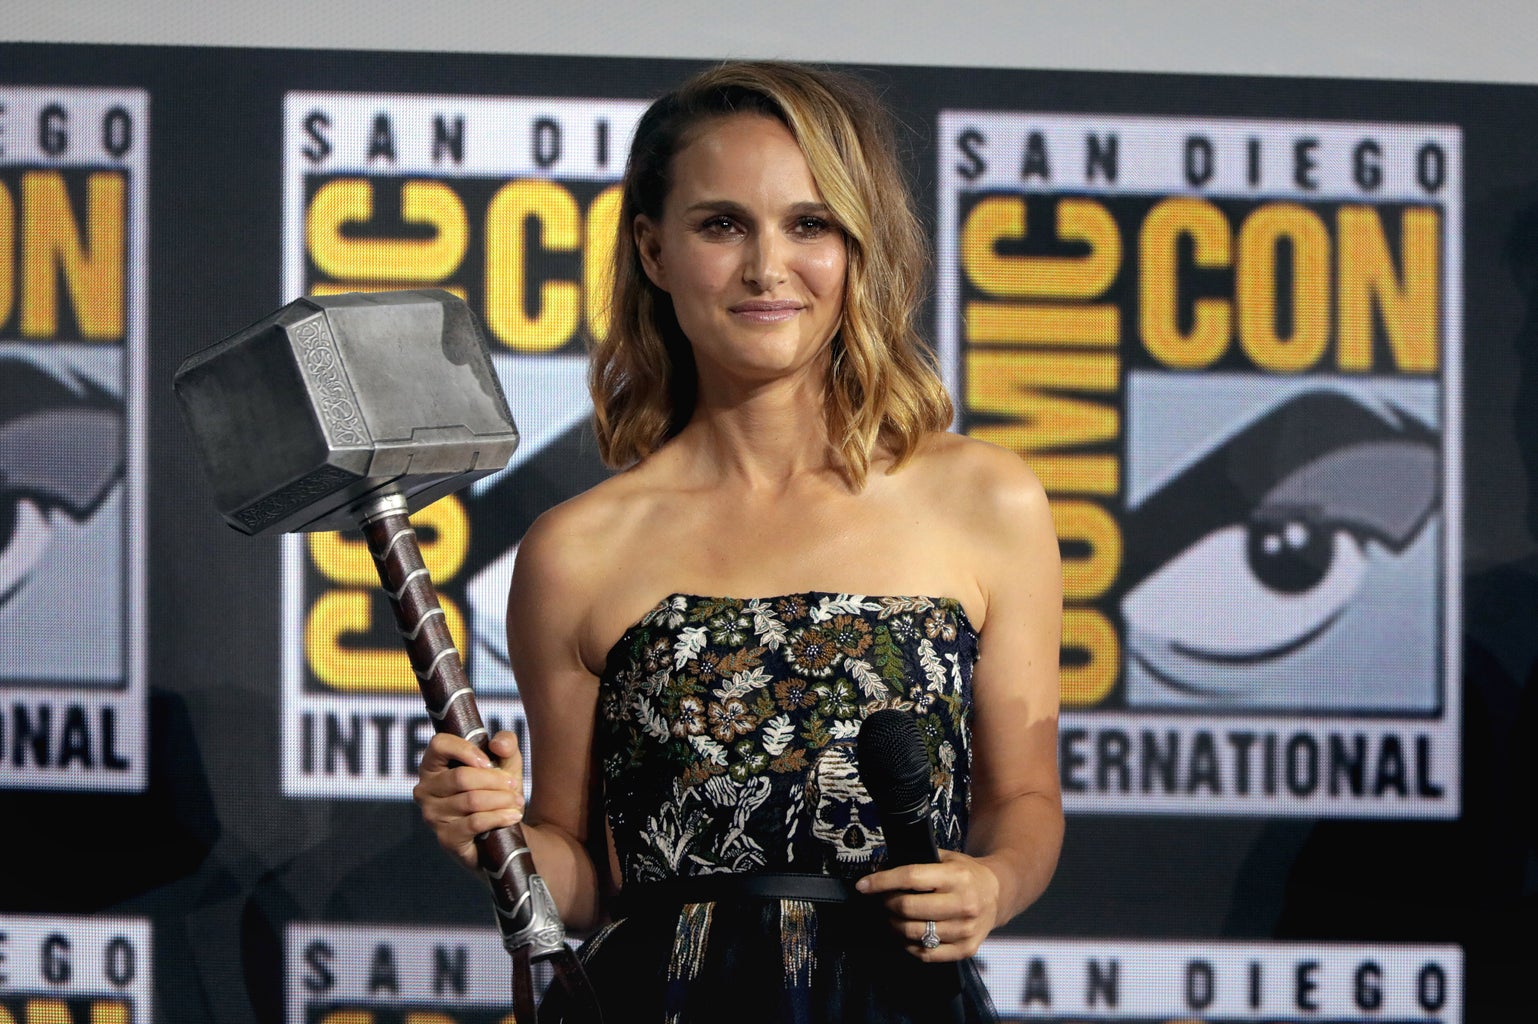 Natalie Portman at the 2019 San Diego Comic Con